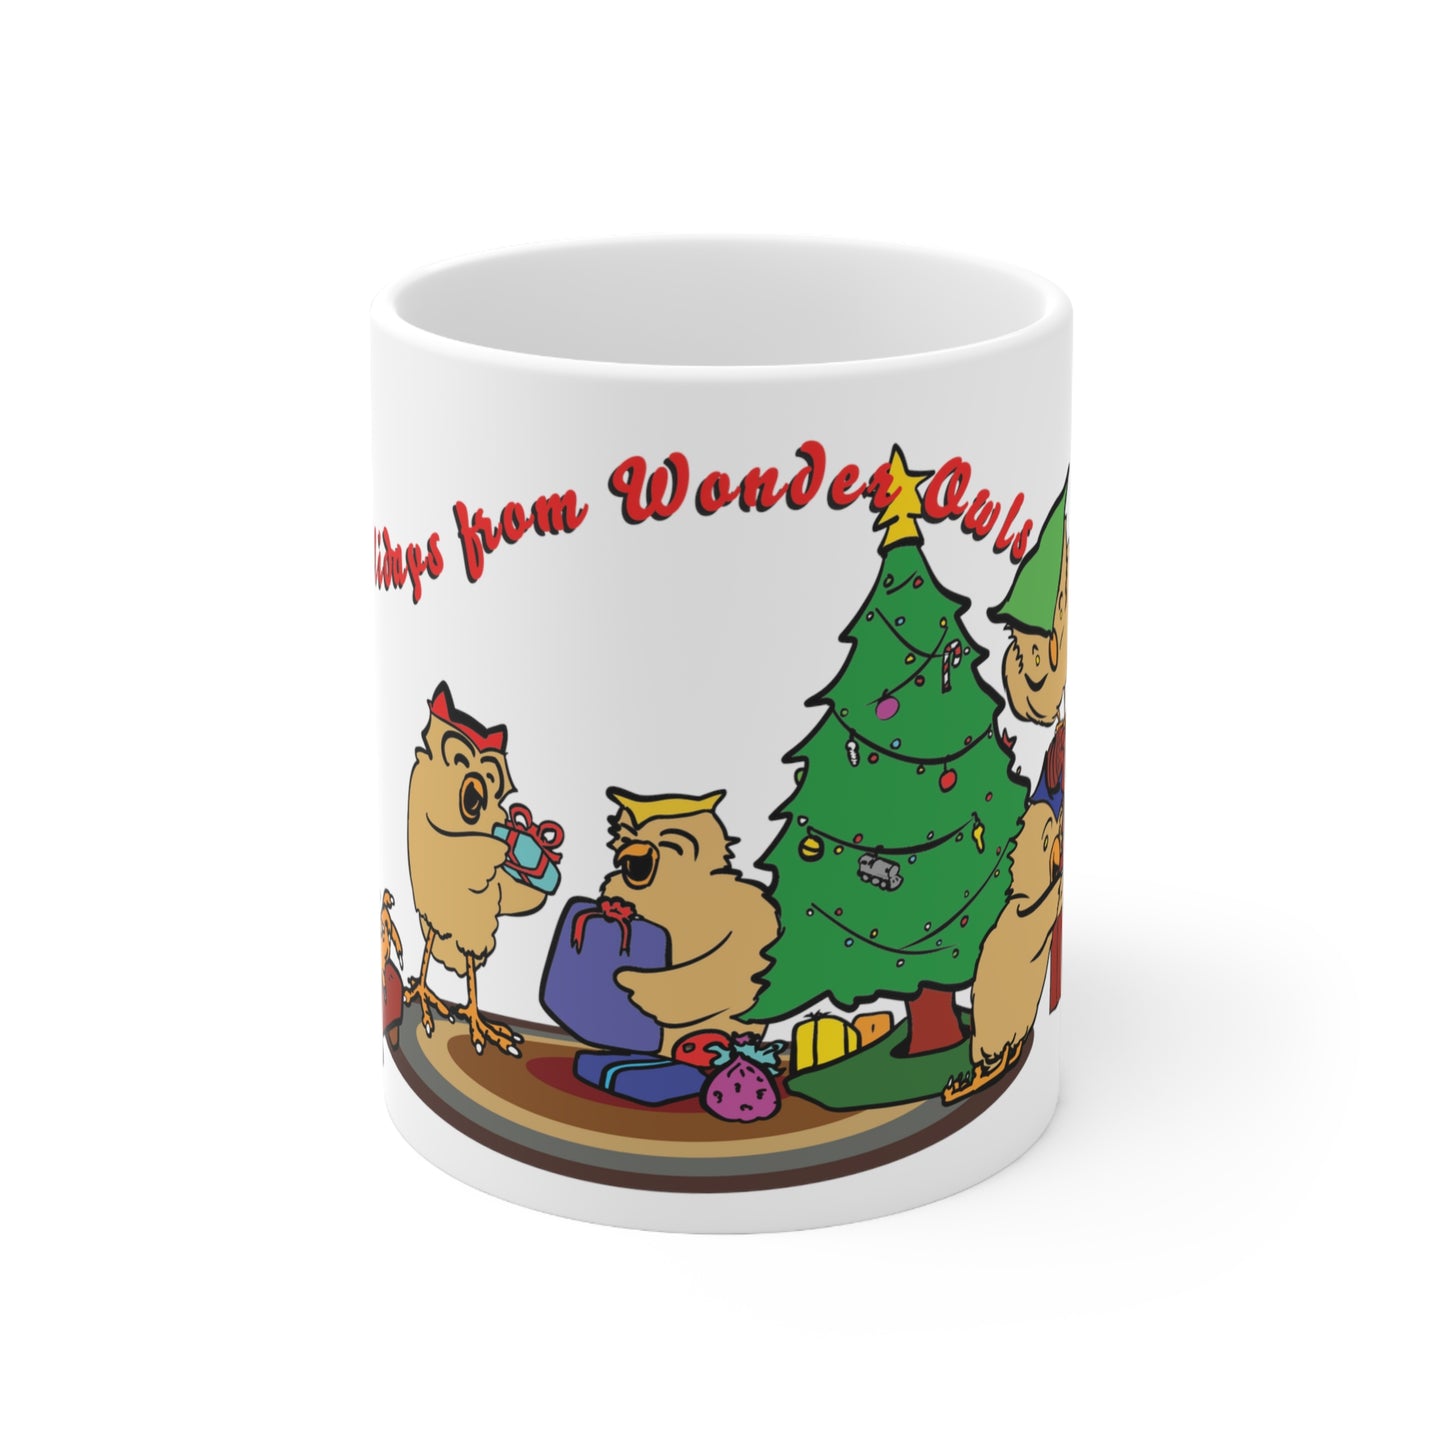 Holiday Happiness from Wonder Owls Mug 11oz